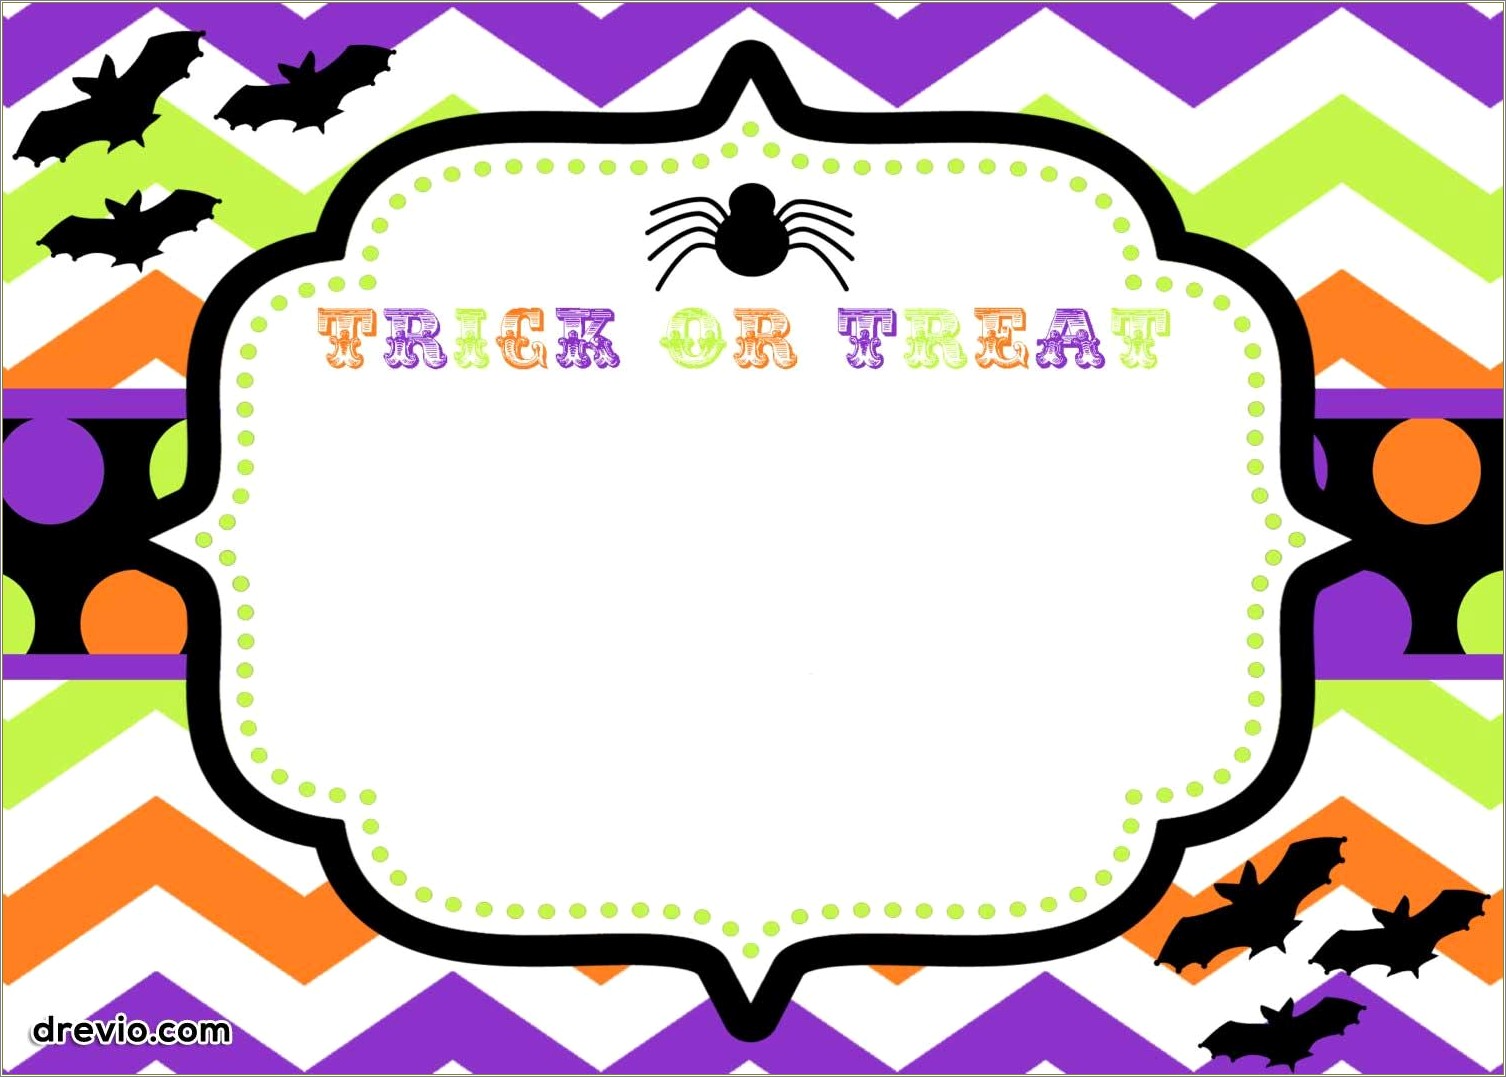 Free Halloween Party Invitation Templates Printable